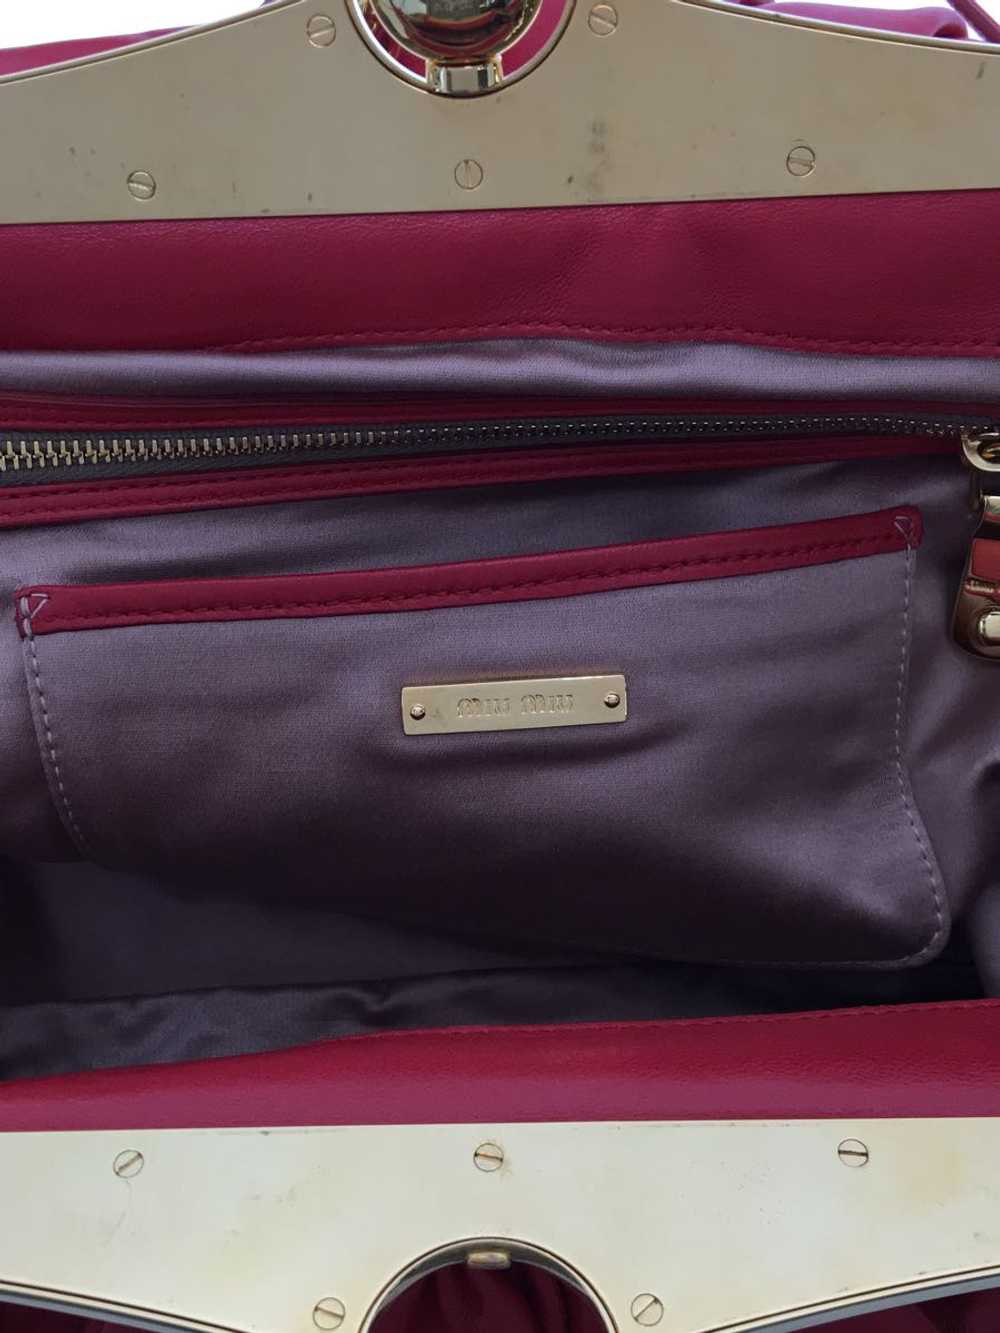 MIUMIU Purse/2Way Shoulder Bag/Leather/Red Bag - image 6